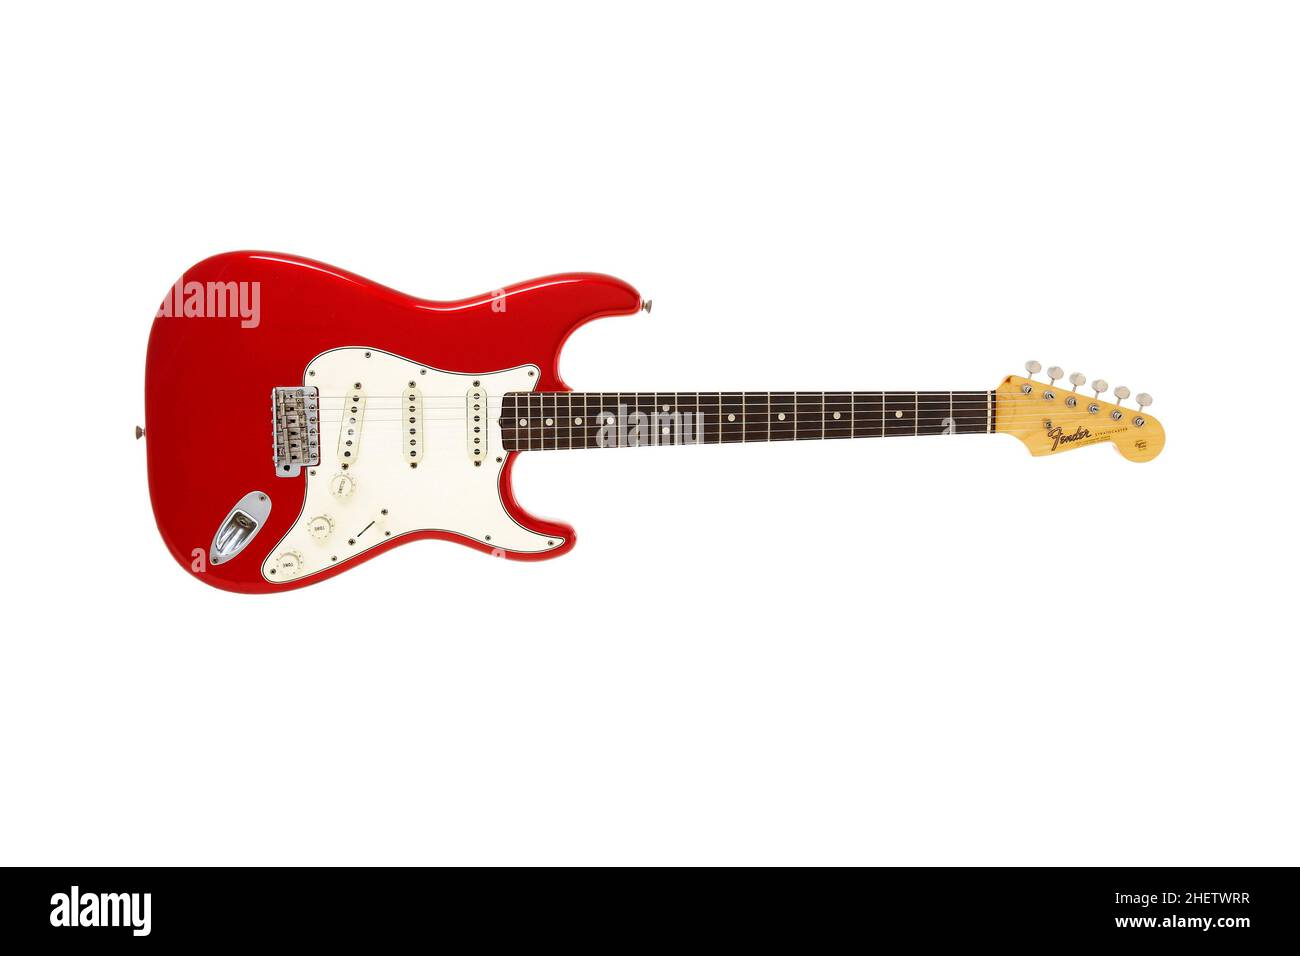 1965 chitarra rossa Fender Stratocaster Candy Apple Foto stock - Alamy